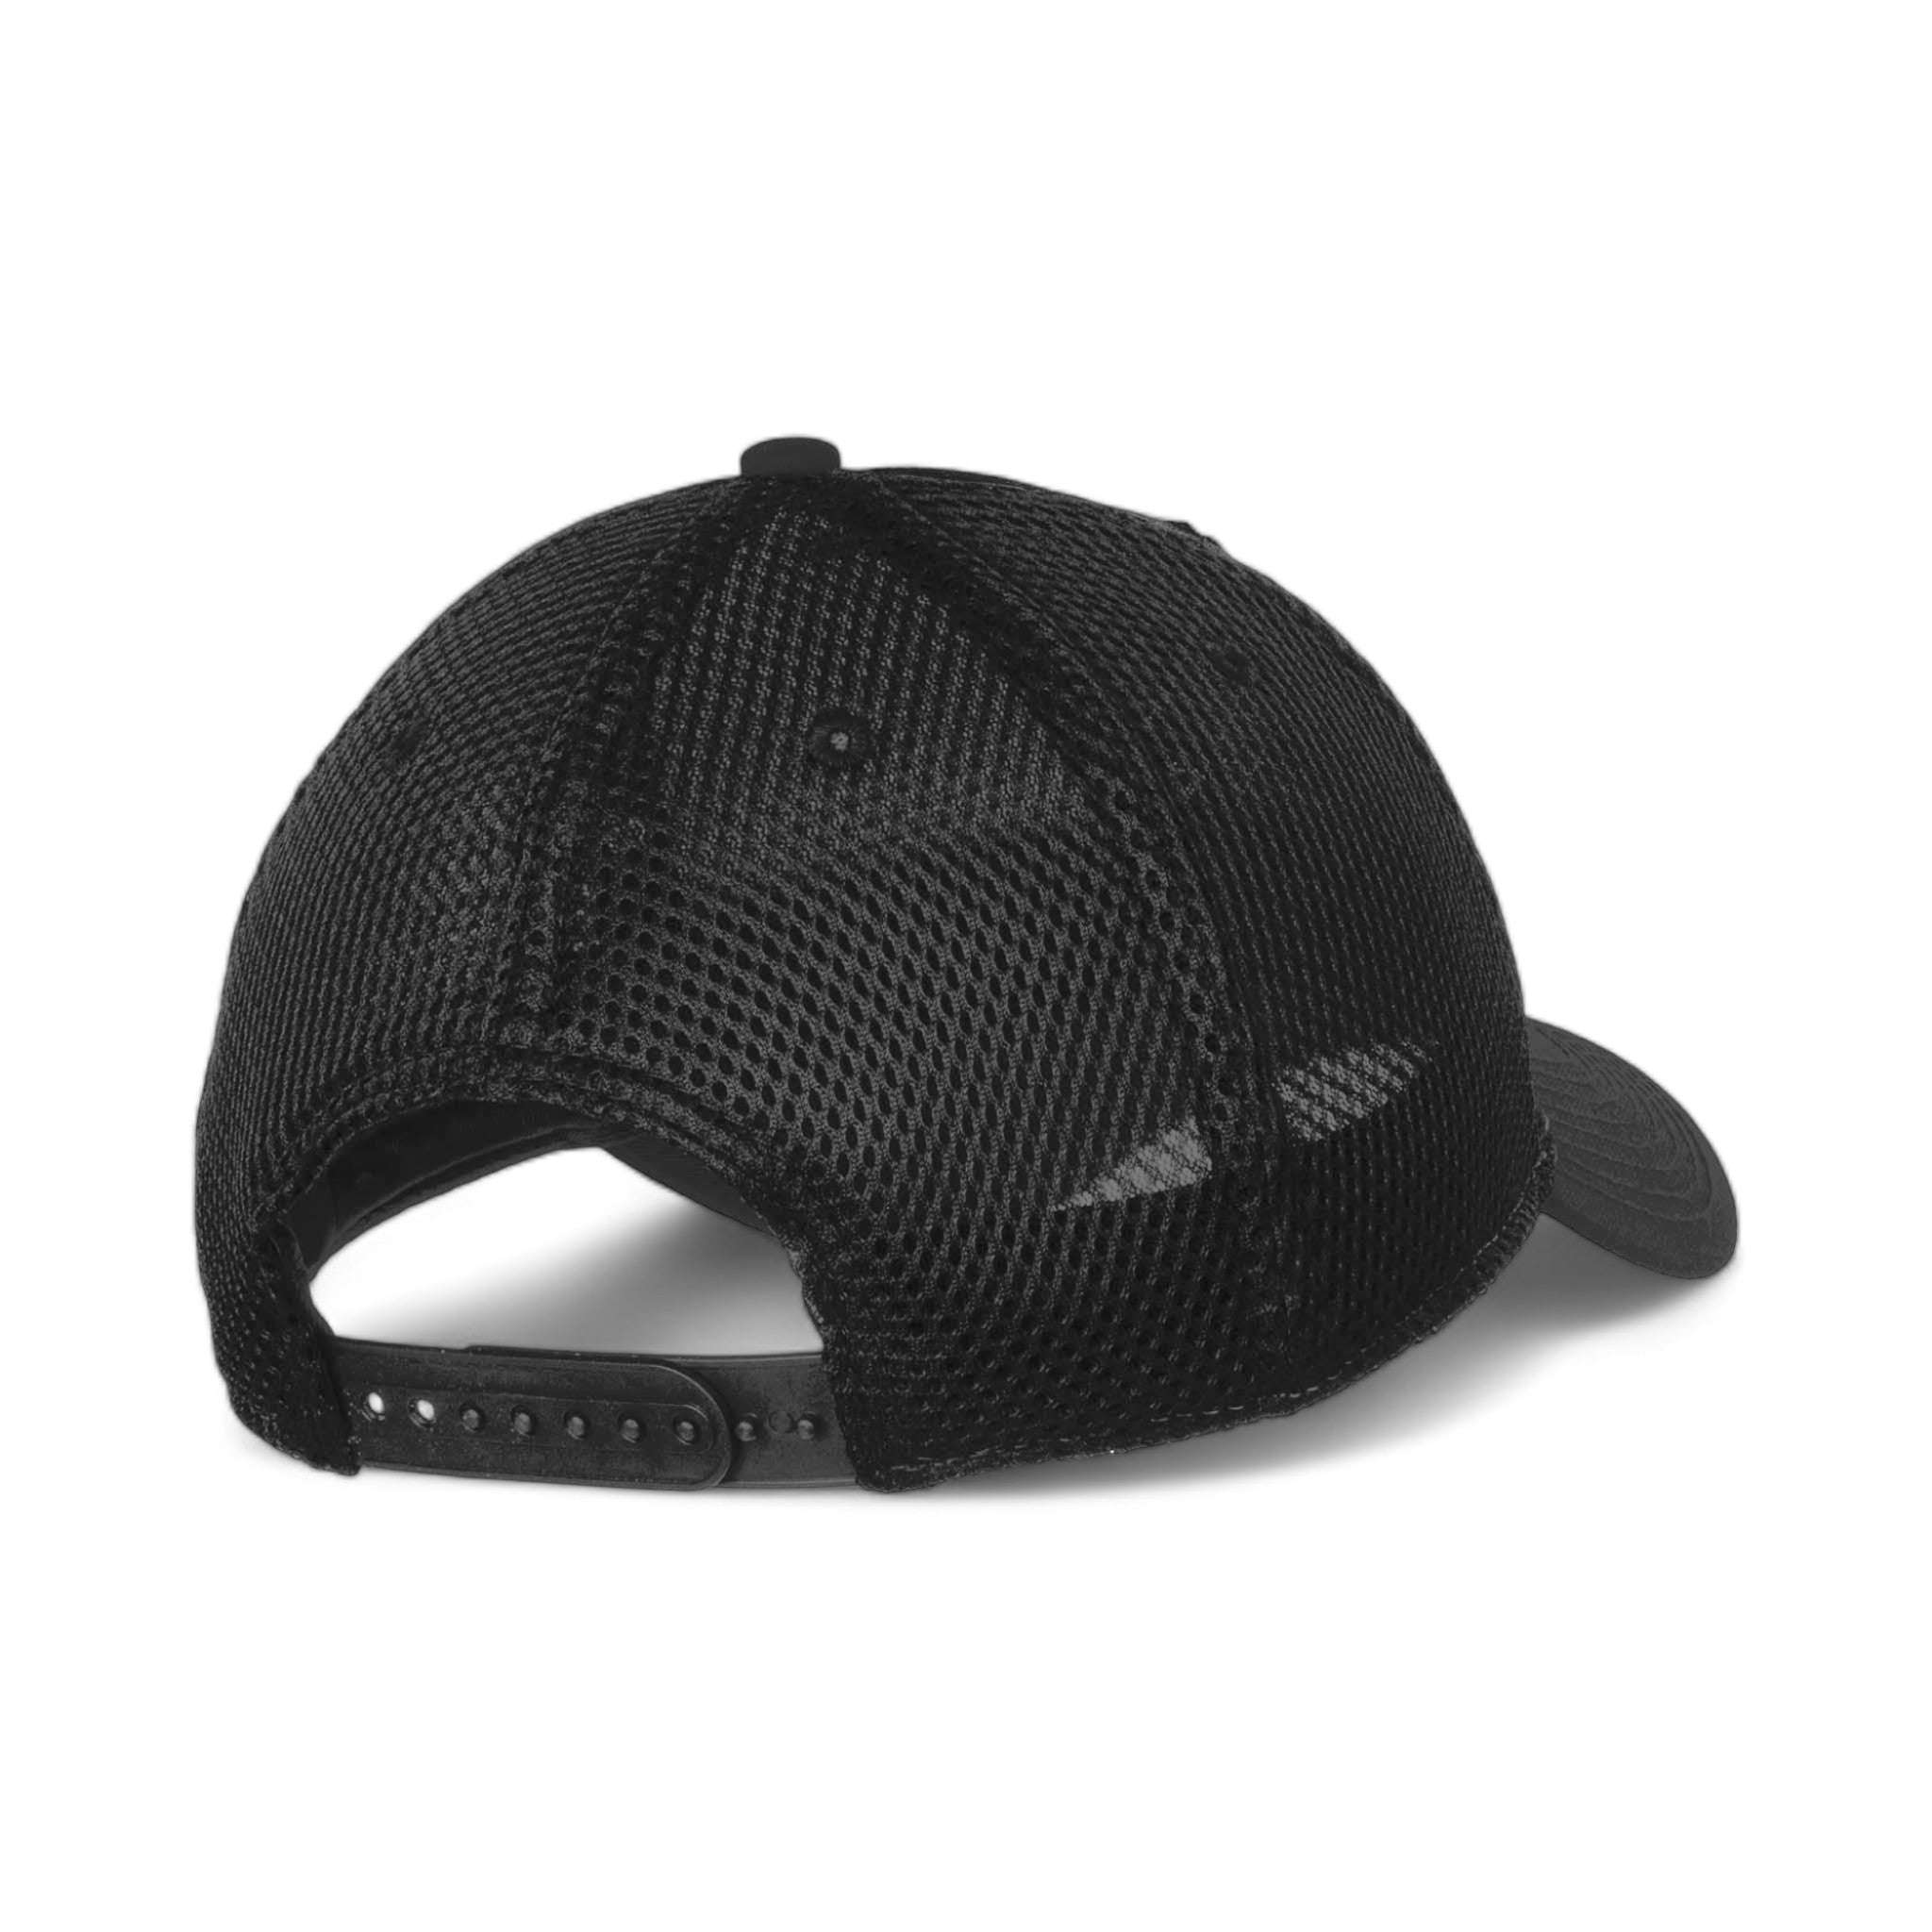 Back view of New Era NE204 custom hat in black and black